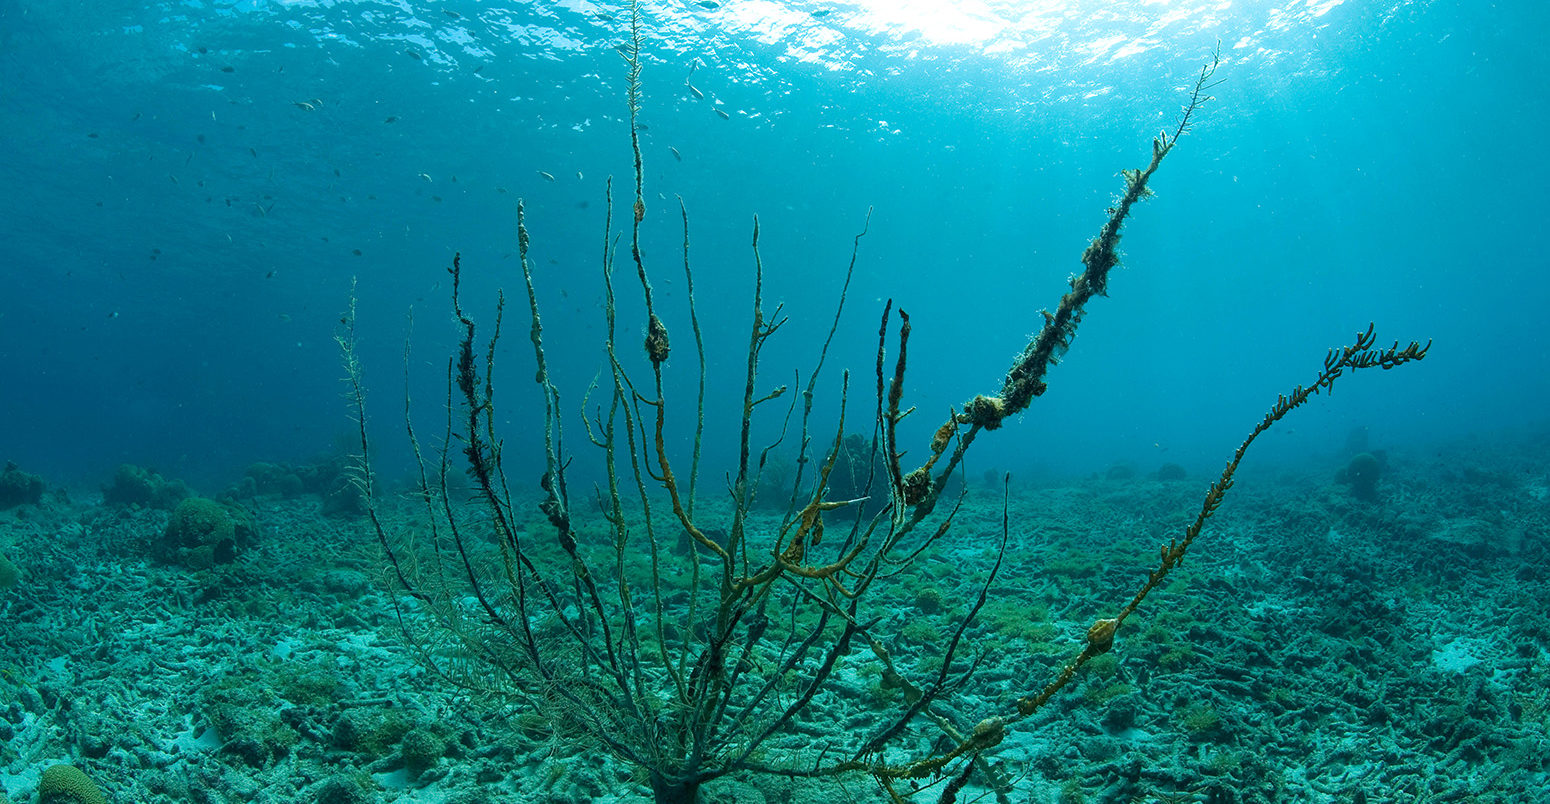 Dead sea fan coral, Caribbean sea. Credit: Helmut Corneli / Alamy Stock Photo. M731Y2